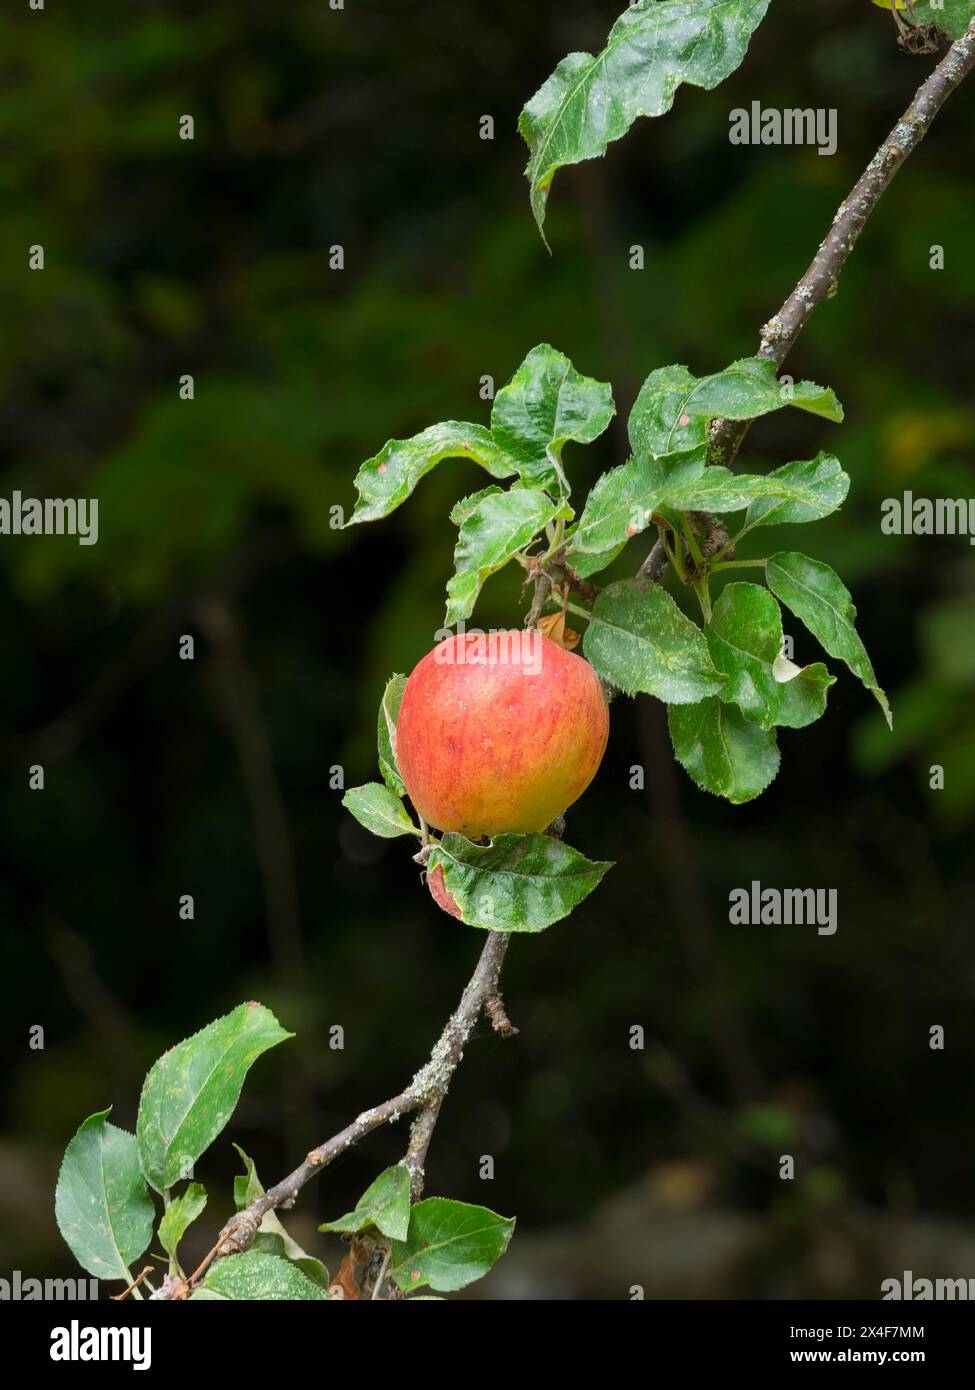 USA, Washington State. Apple and leaves on tree limb Stock Photo